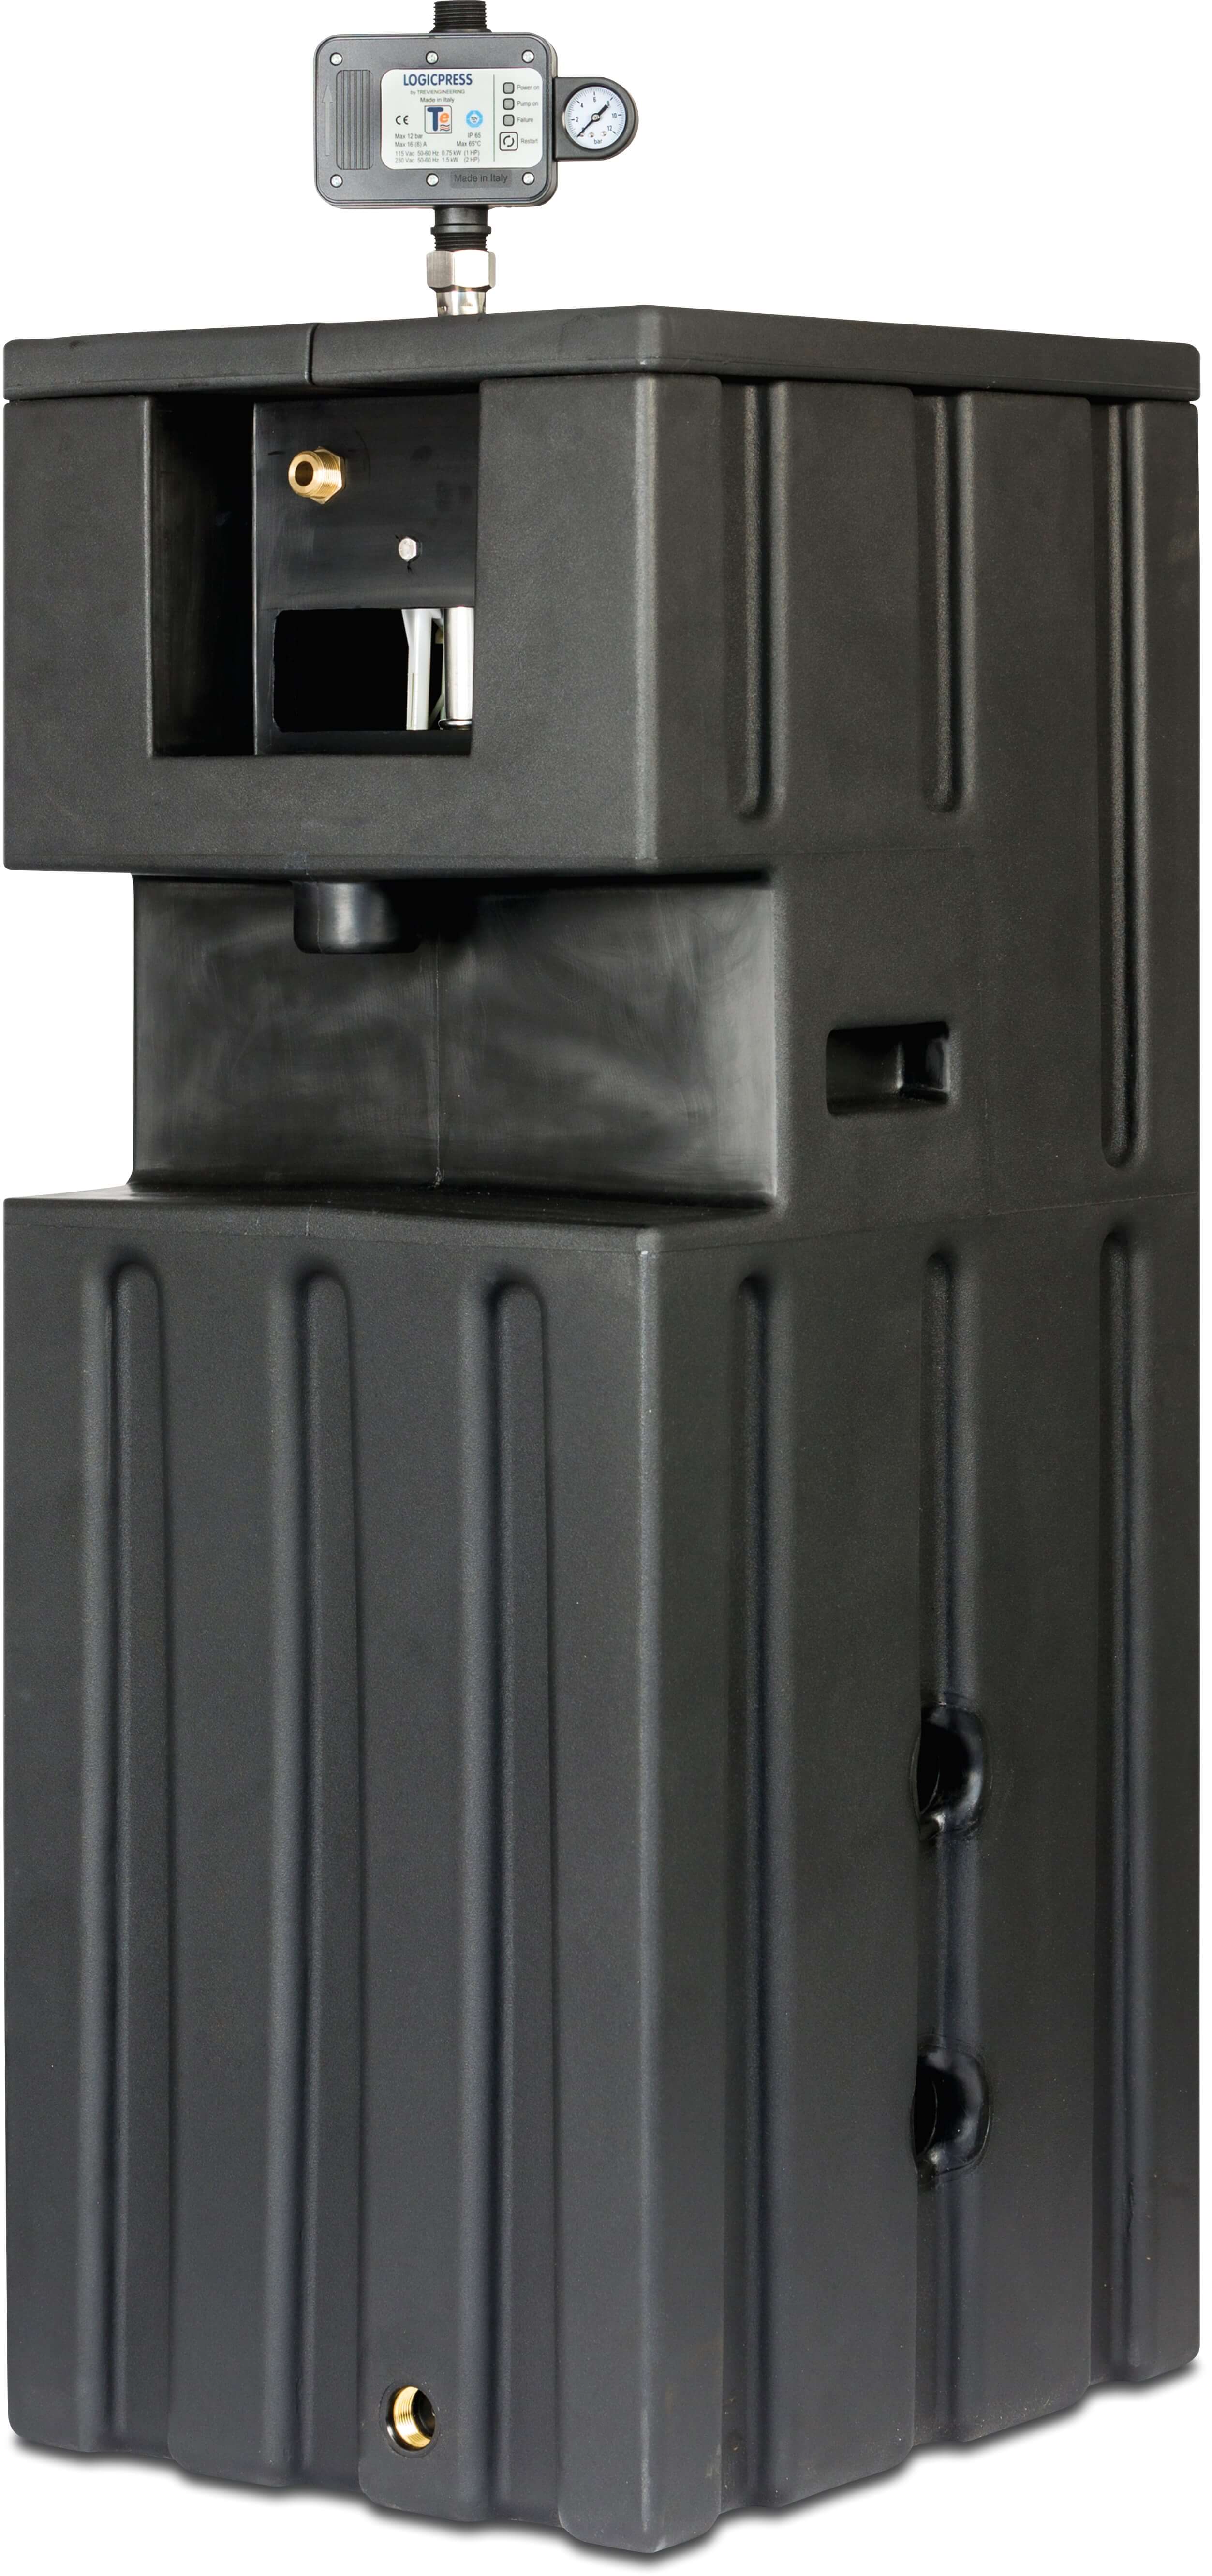 Zulaufbehälter 3/4" x 1" Außengewinde 230VAC BELGAQUA type Combi DSCT mit Minisub & Logicpres Set